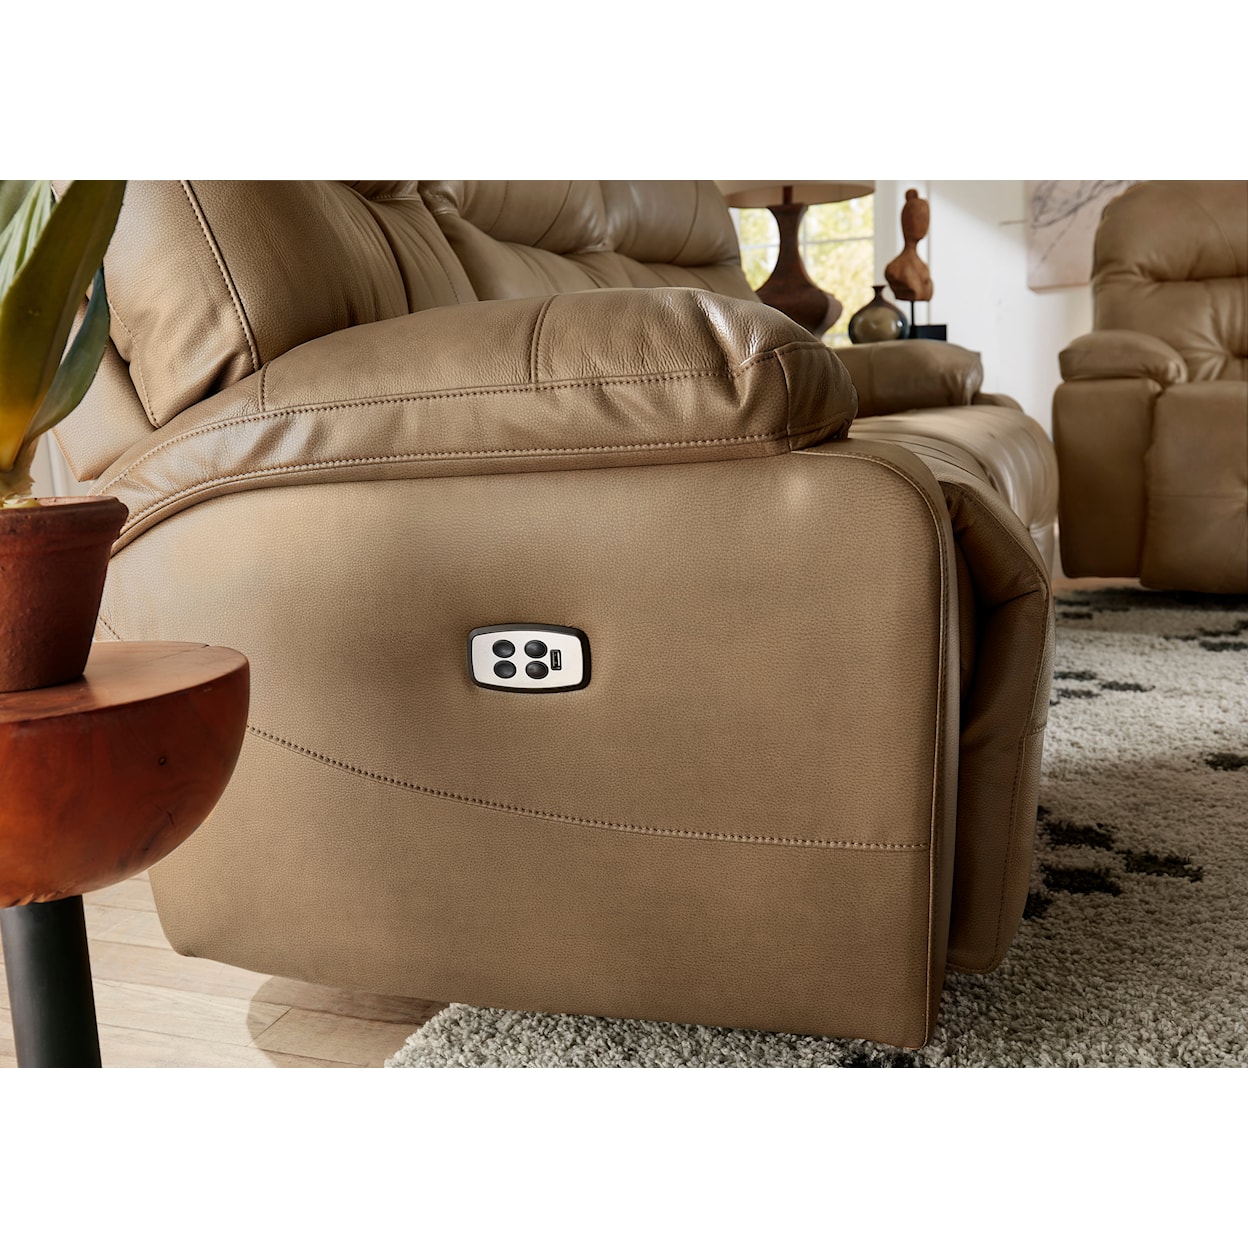 Bravo Furniture Ryson Power Reclining Space Saver Sofa